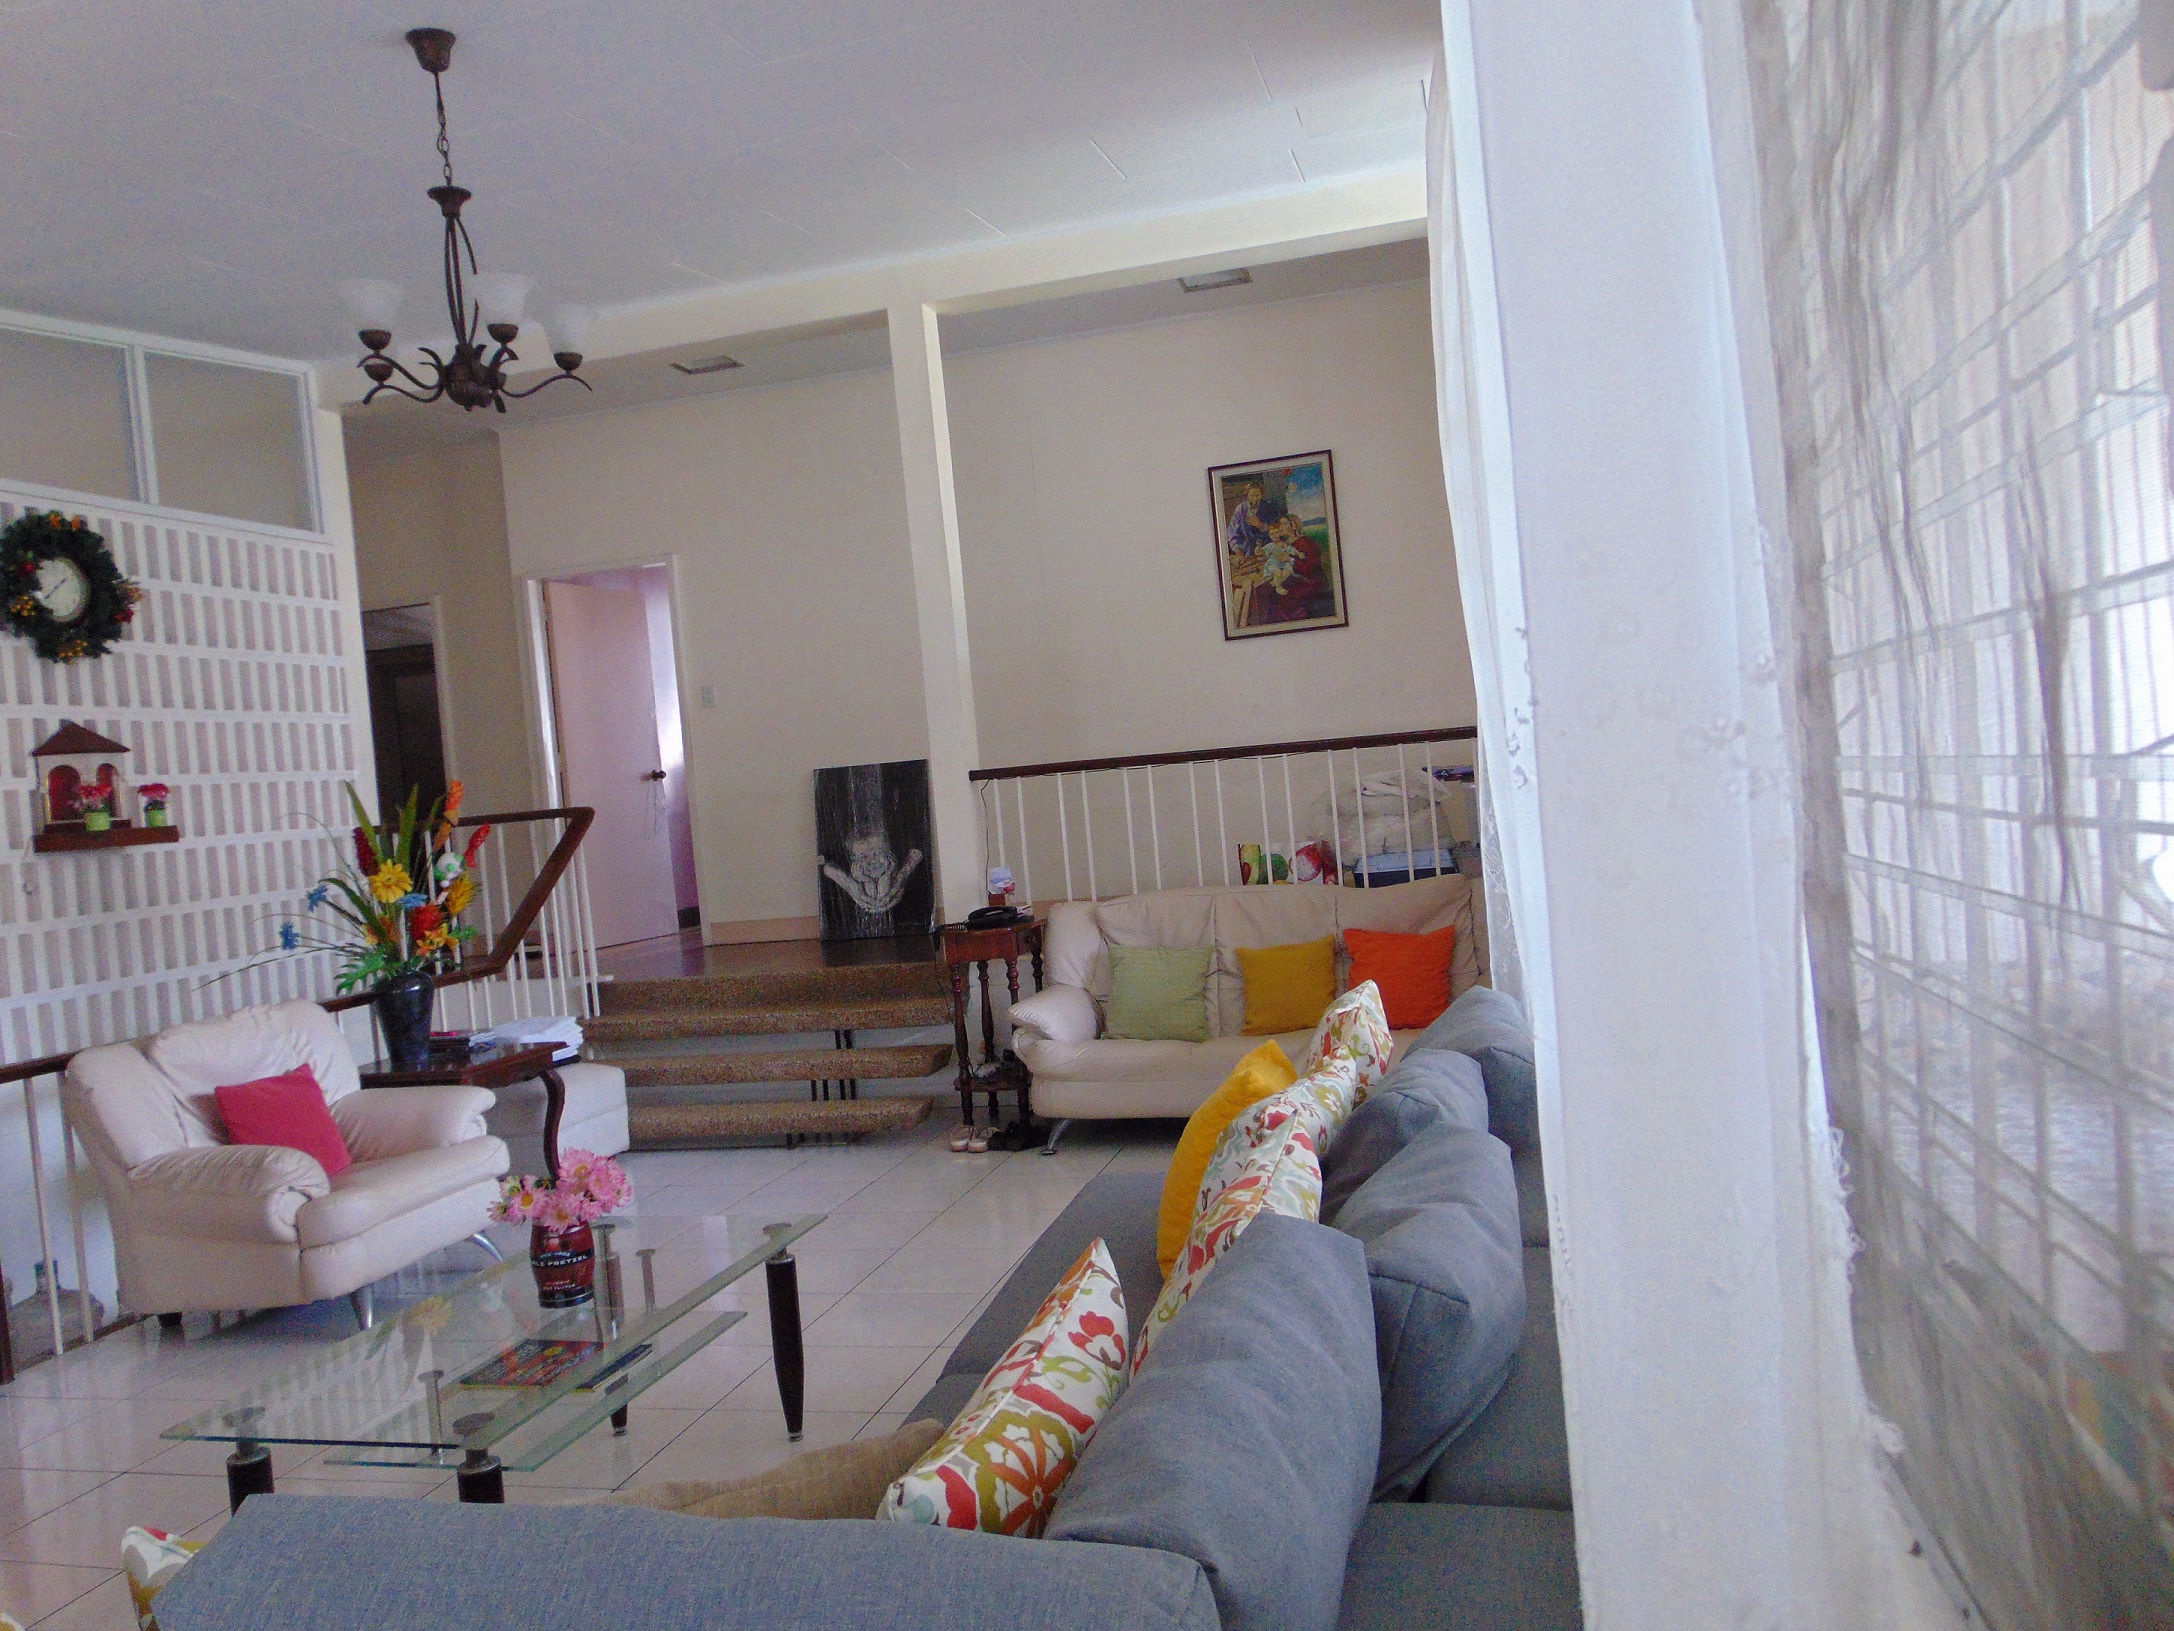 4-bedrooms-bungalow-house-near-redemptorist-church-cebu-city